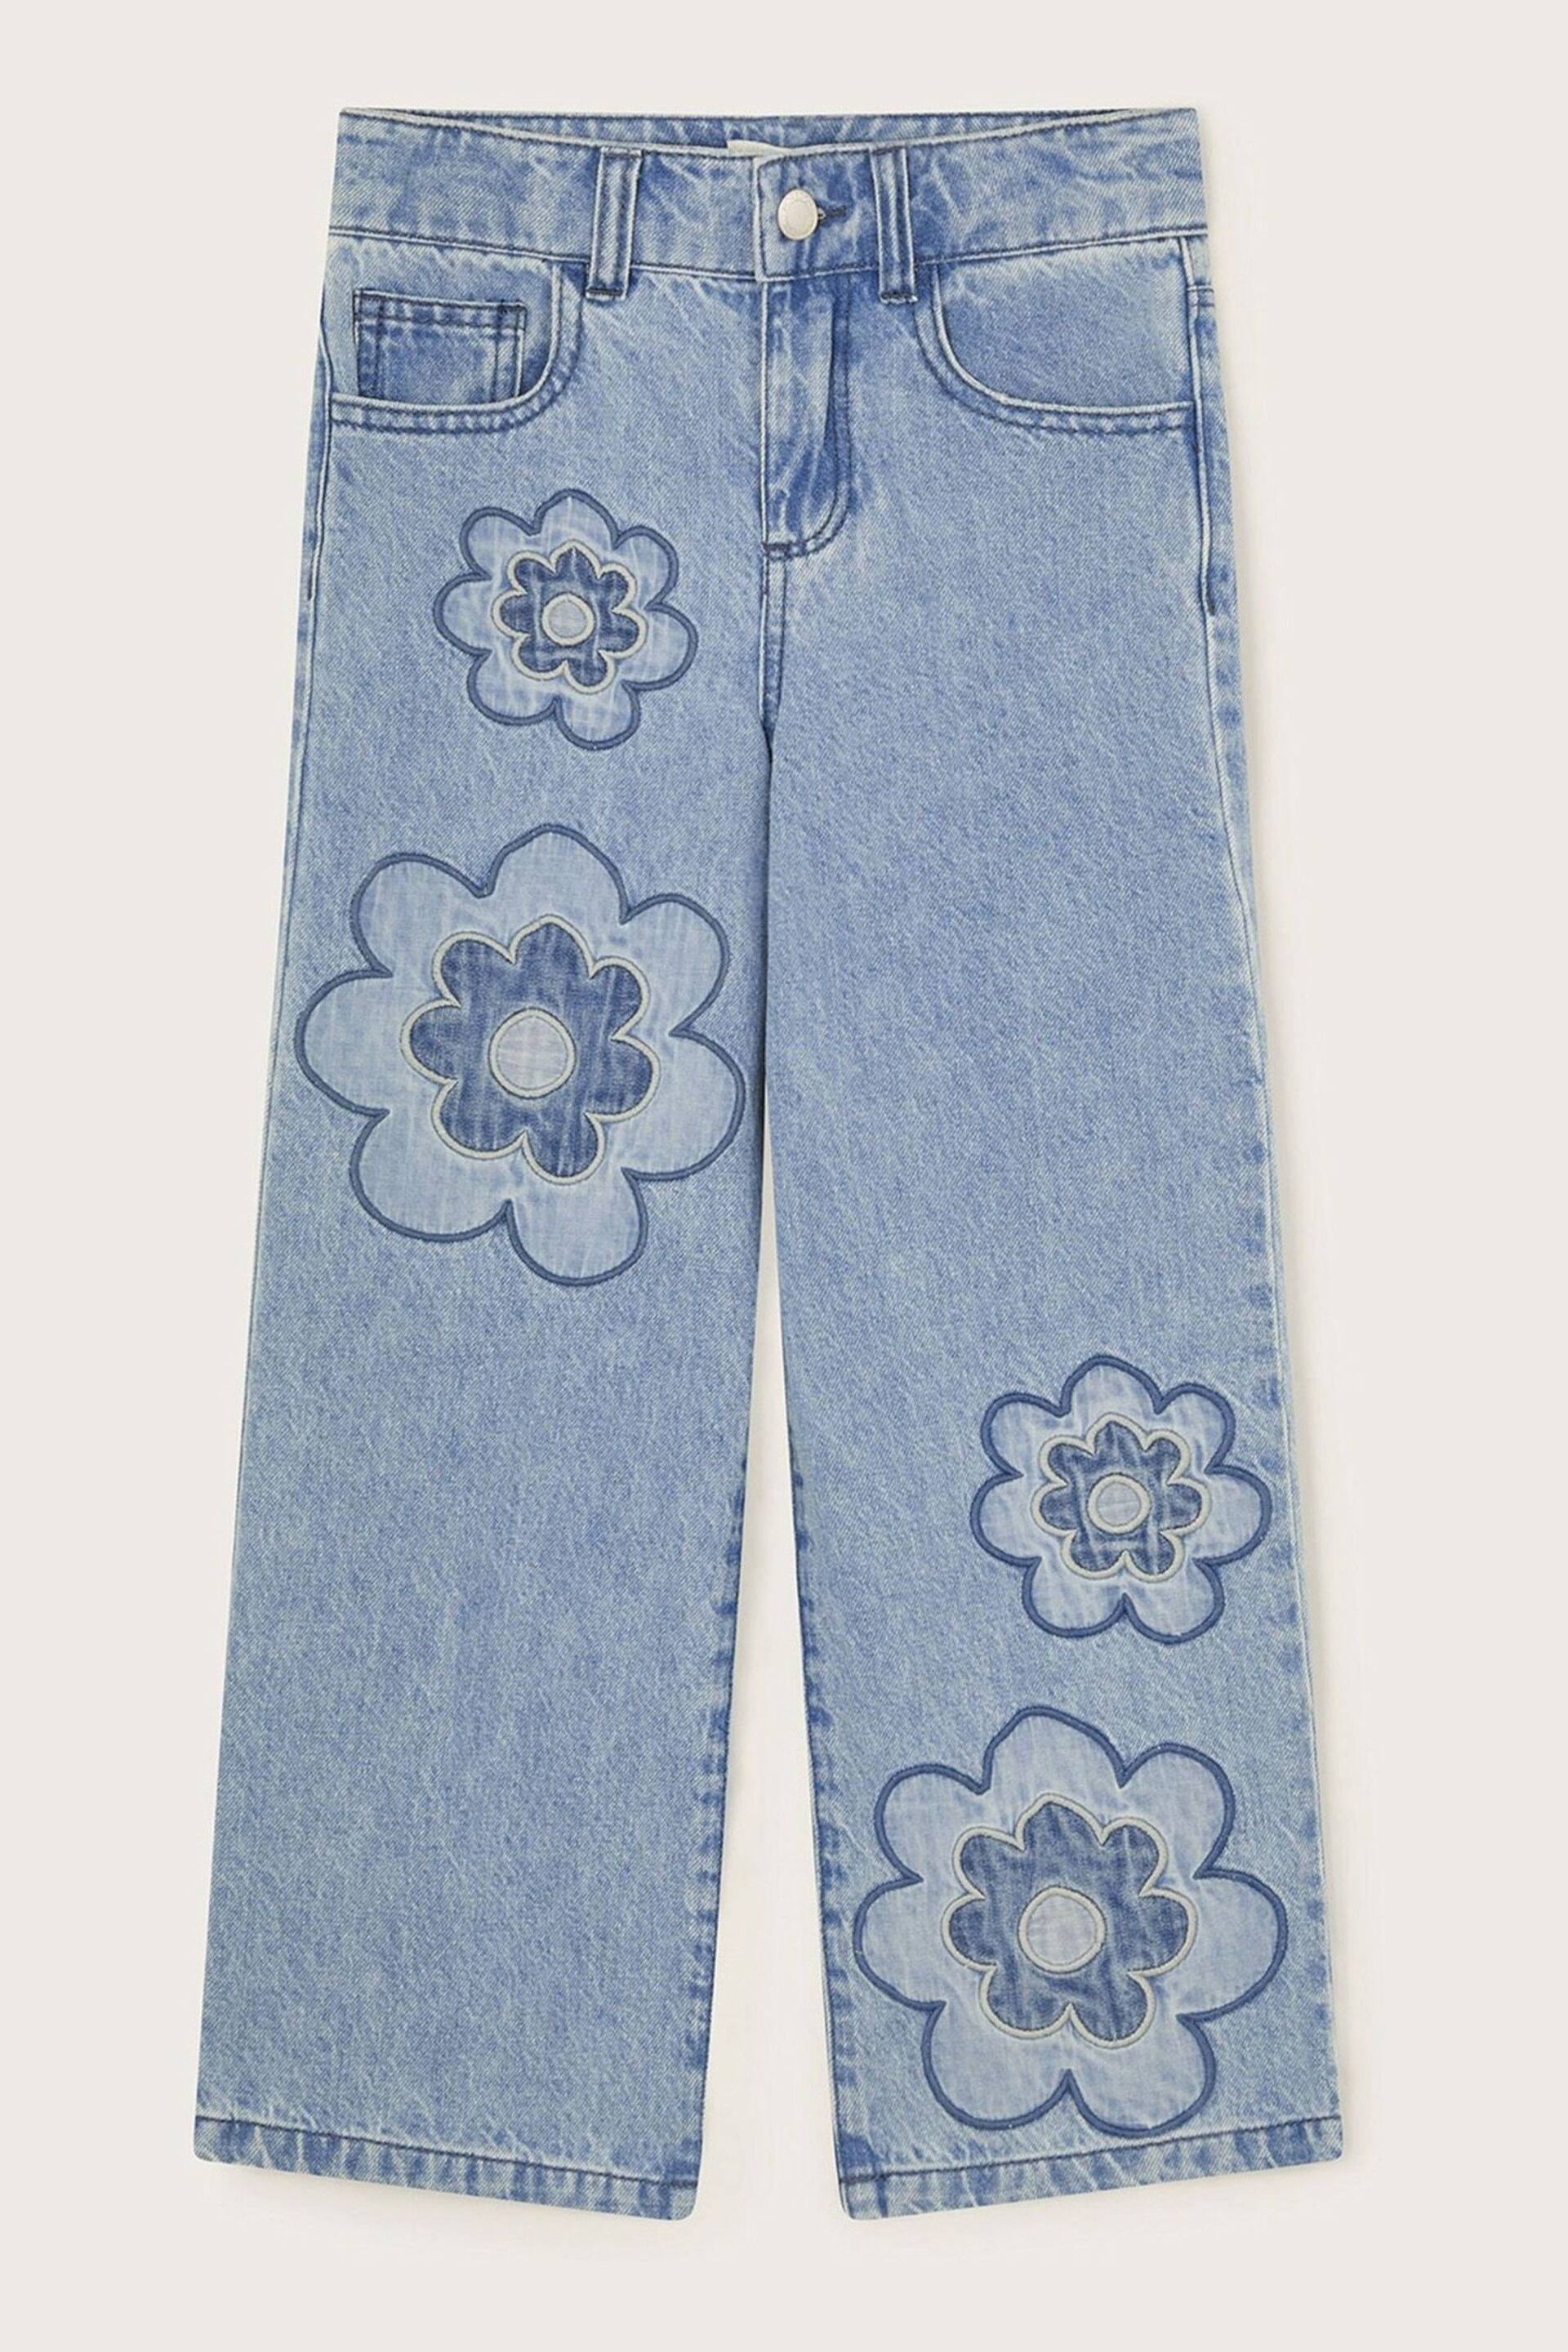 Monsoon Blue Flower Denim Jeans - Image 2 of 4